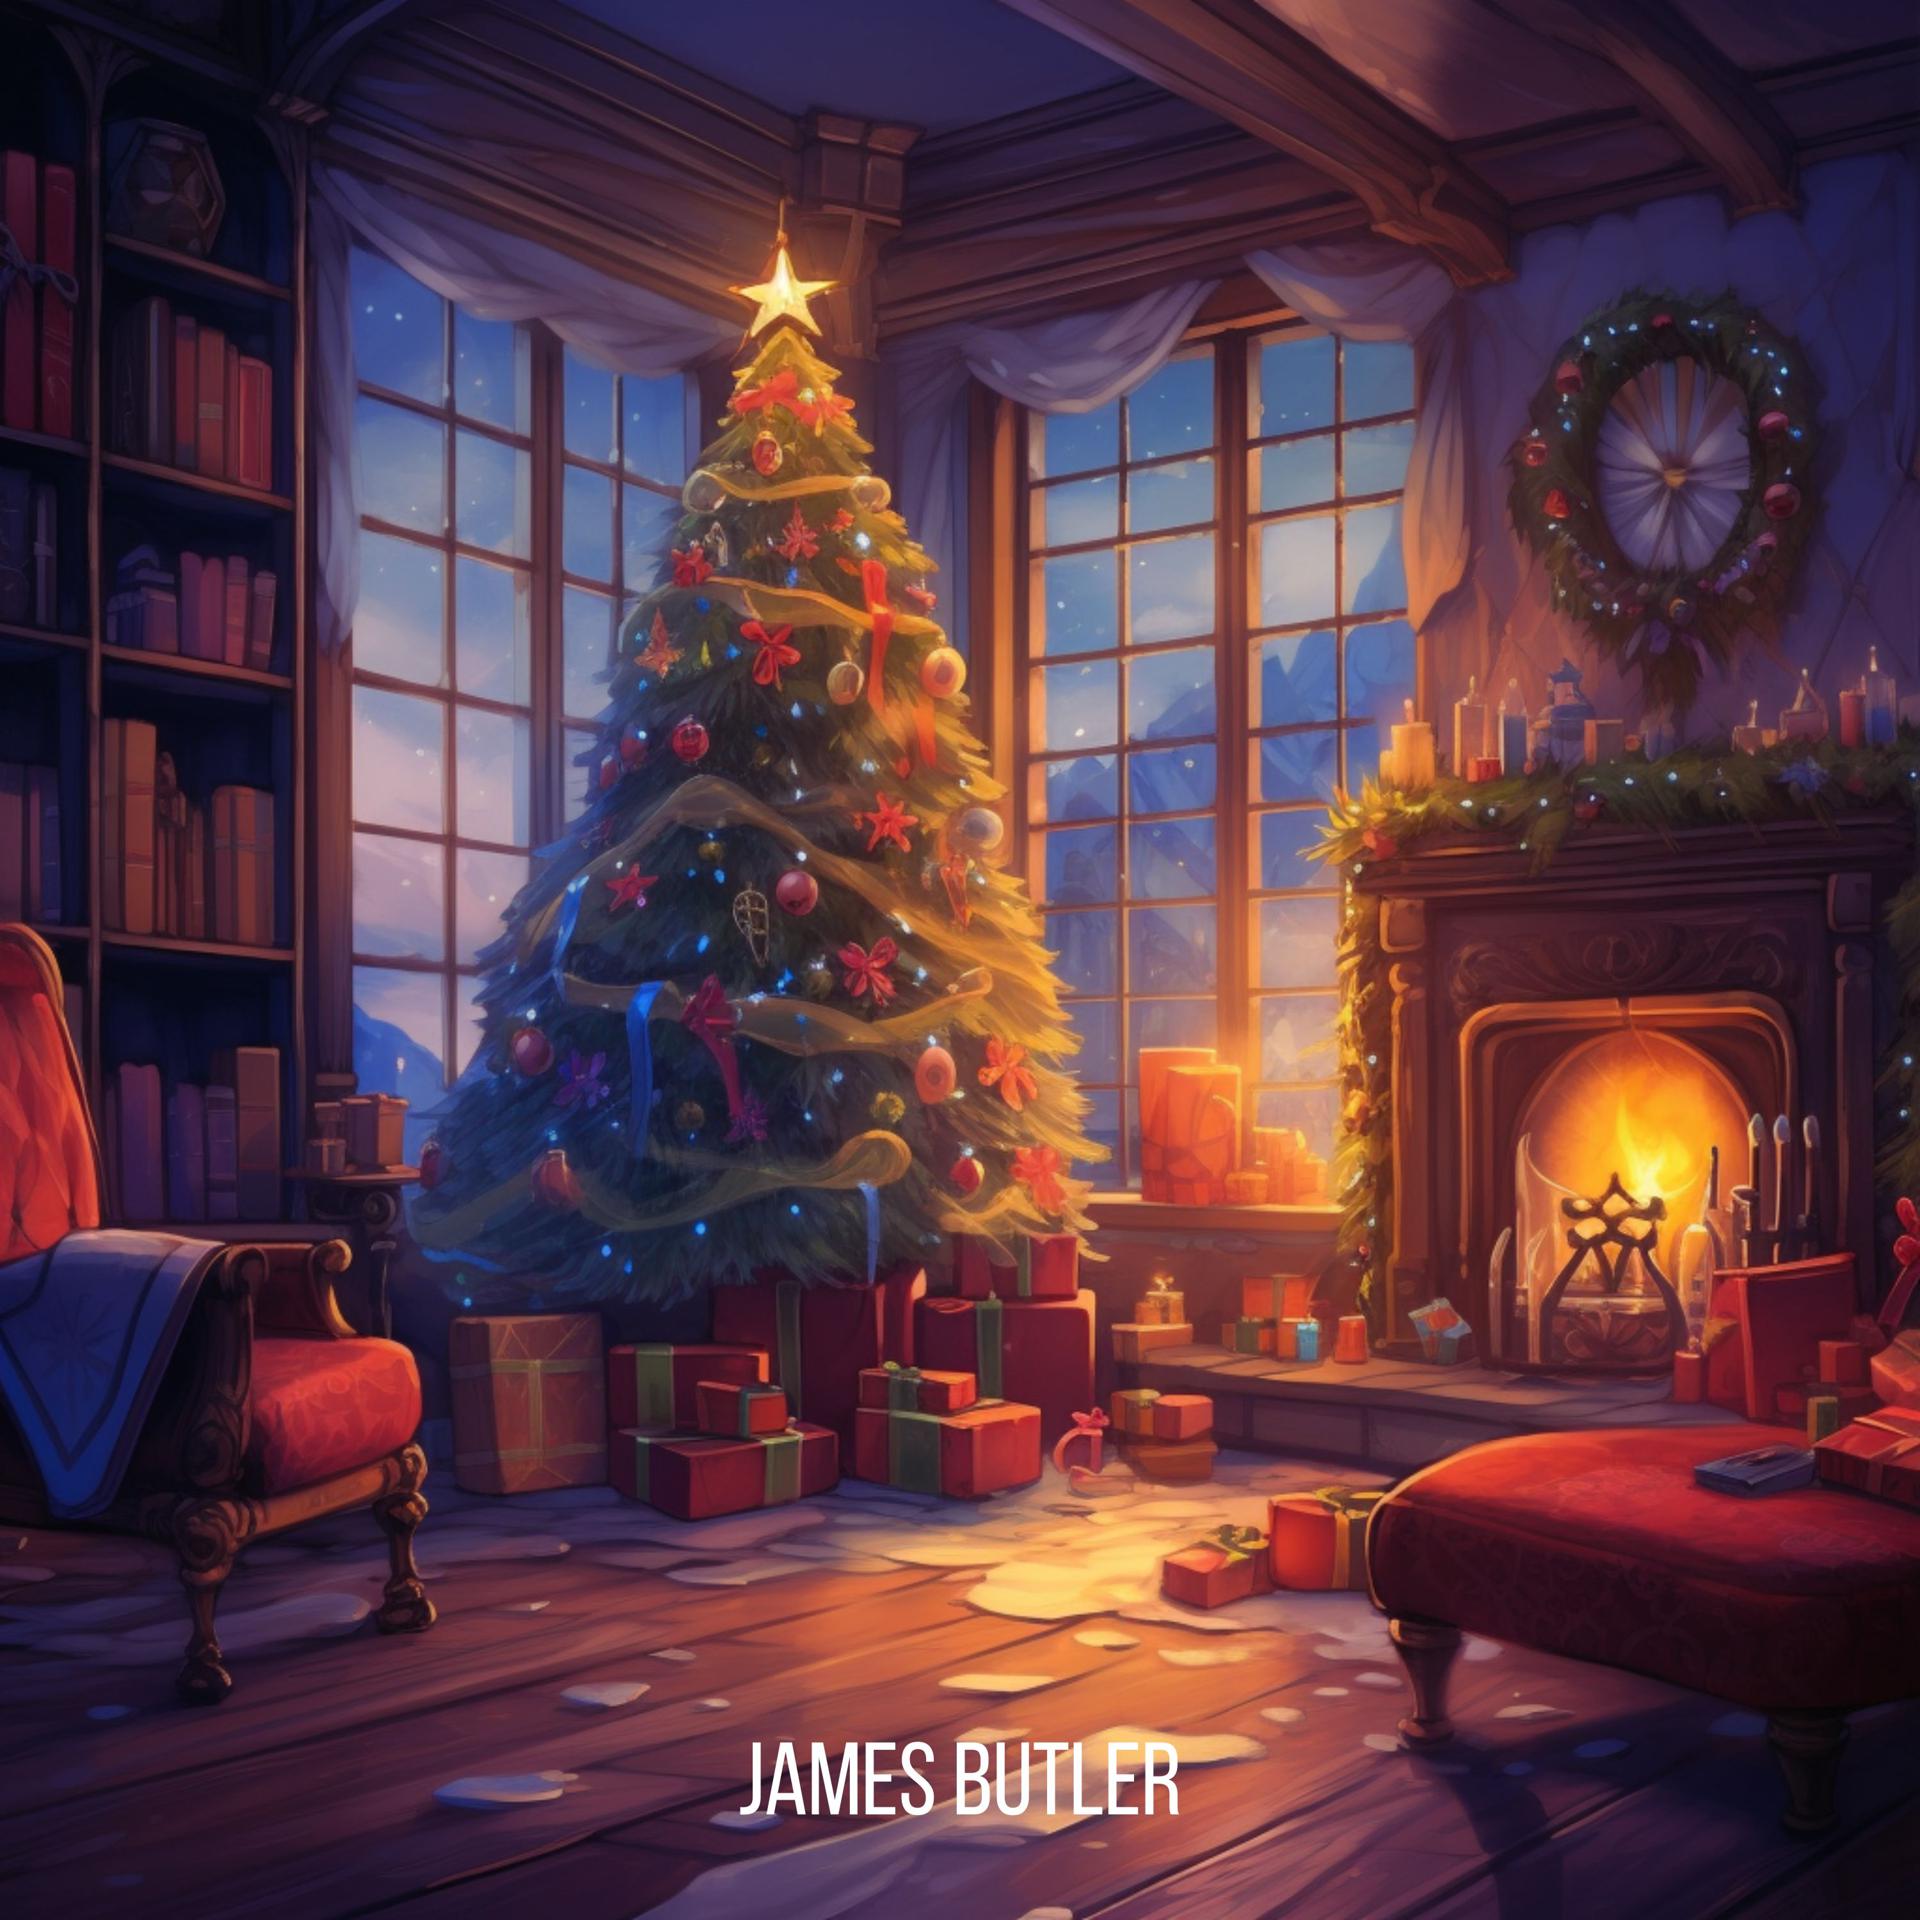 Постер альбома A Jazzy Christmas